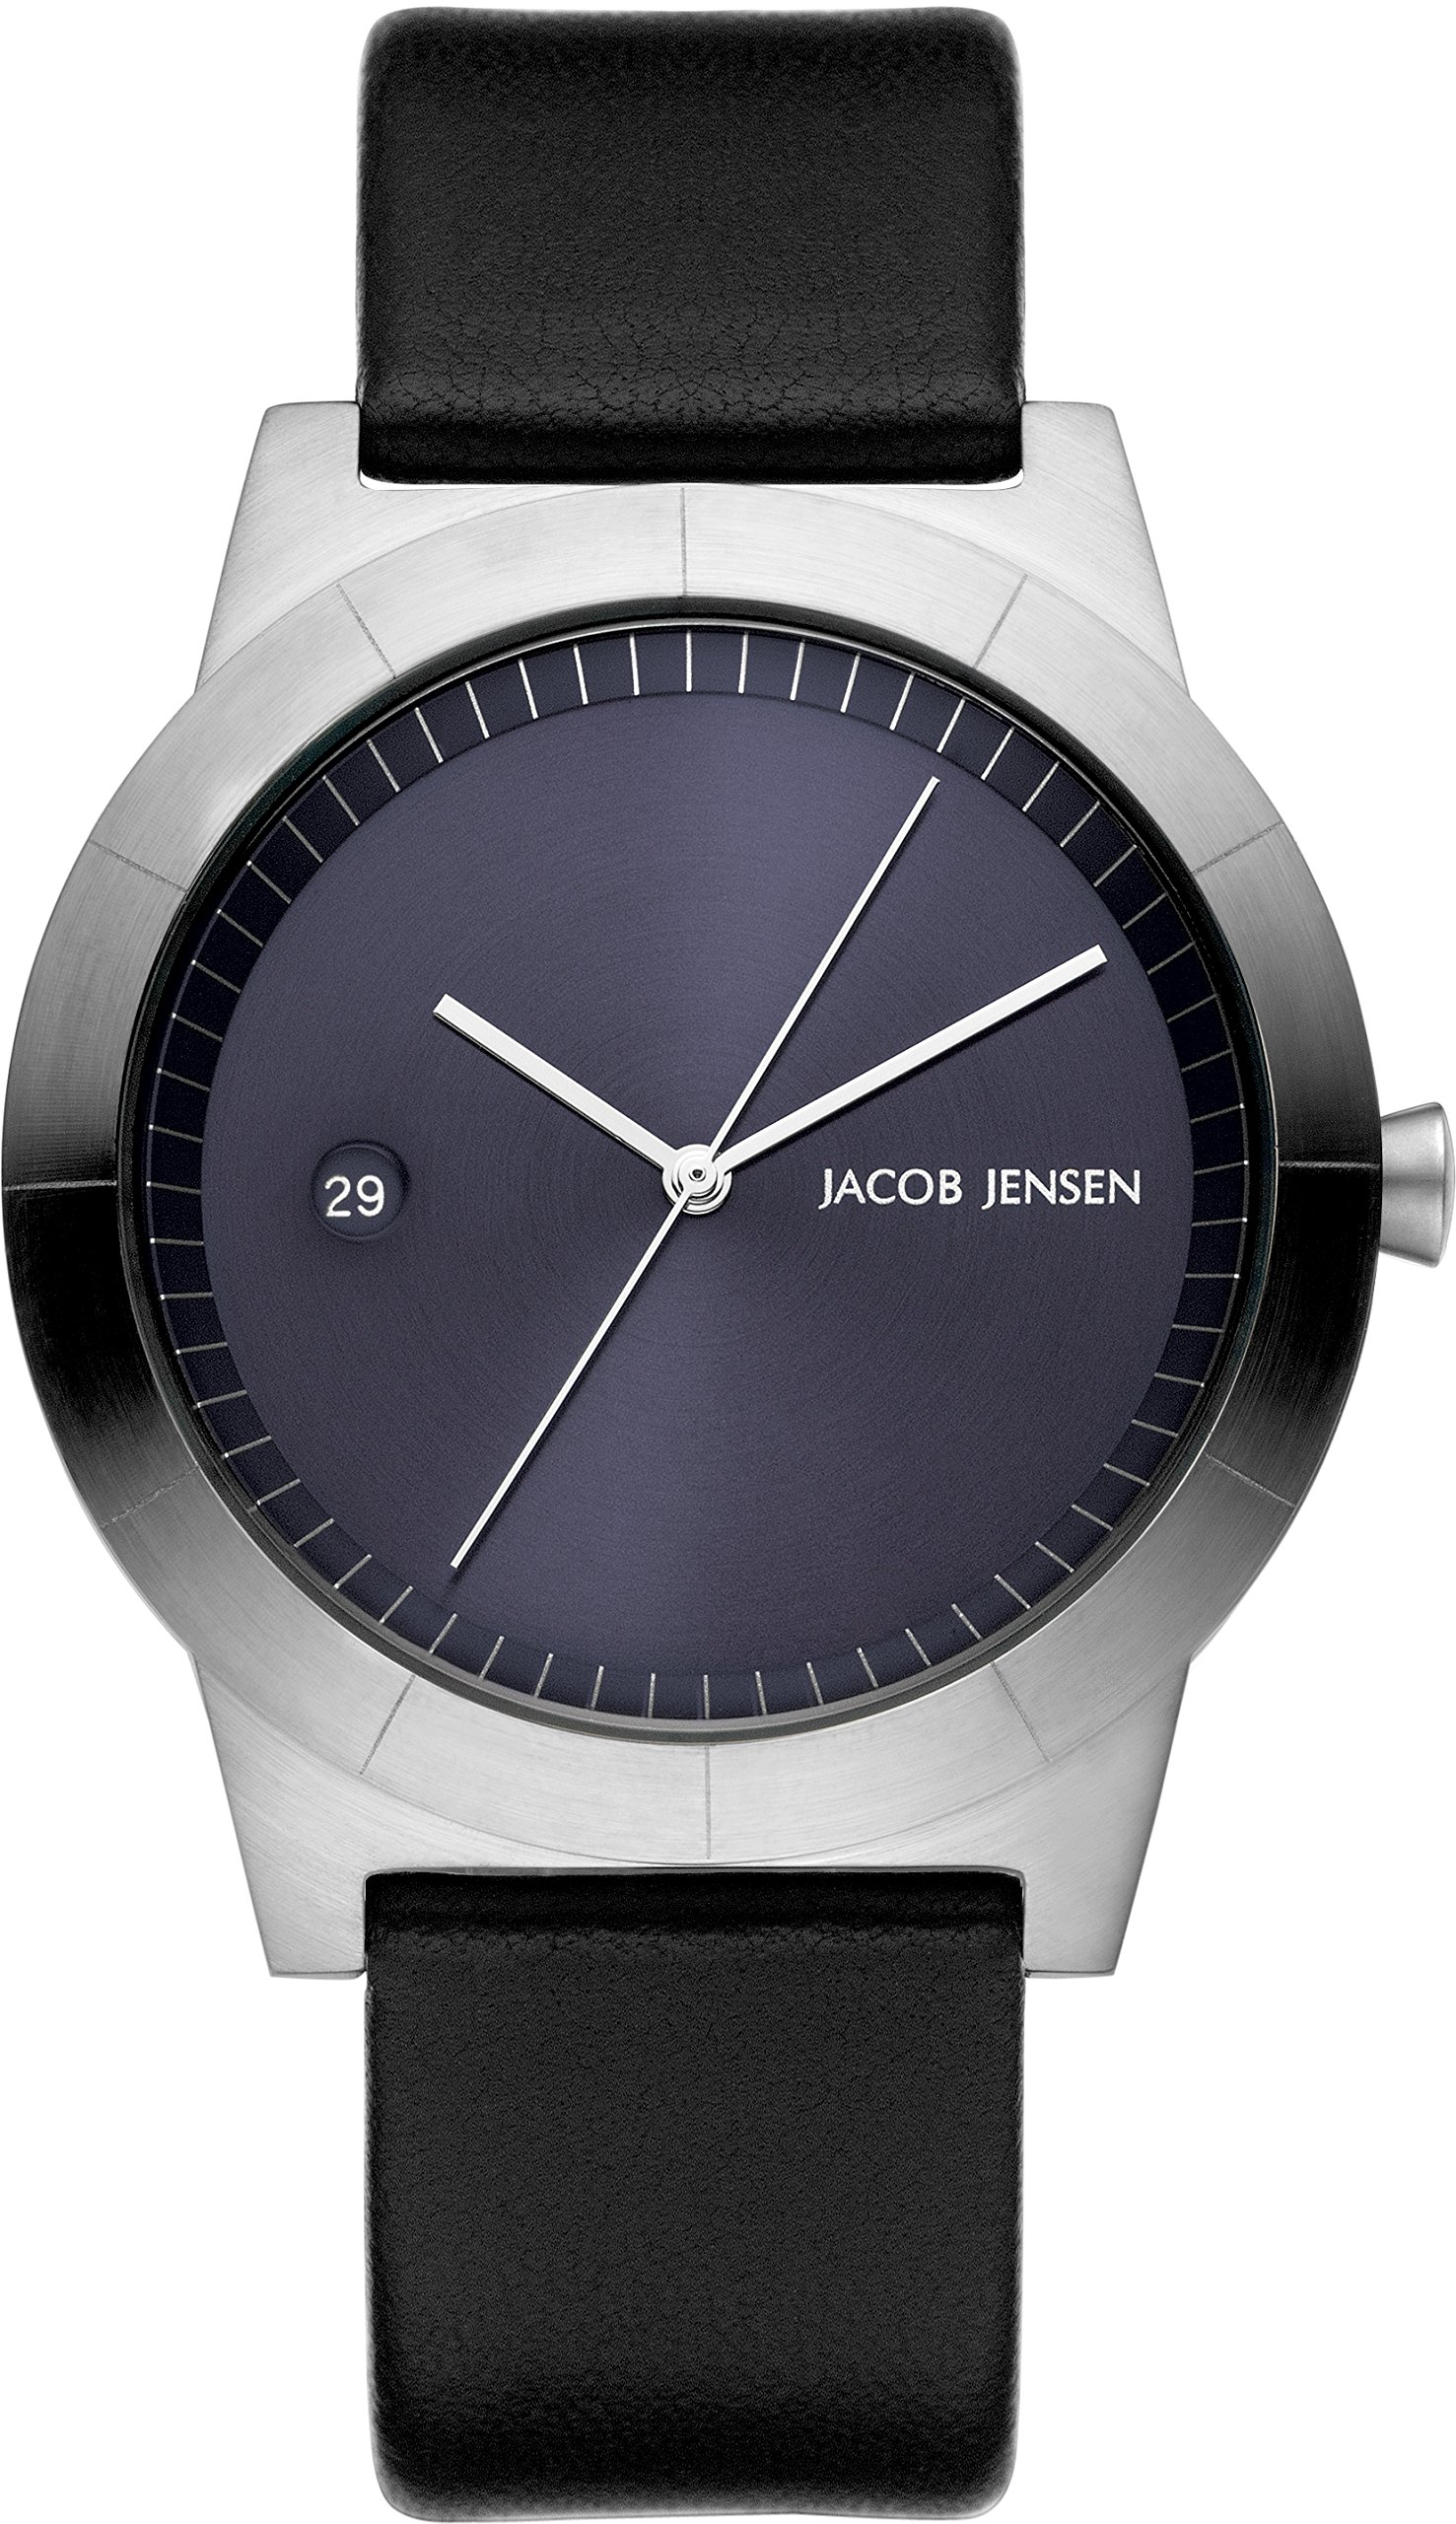 Jacob Jensen Herren Analog Quarz Uhr mit Leder Armband 141